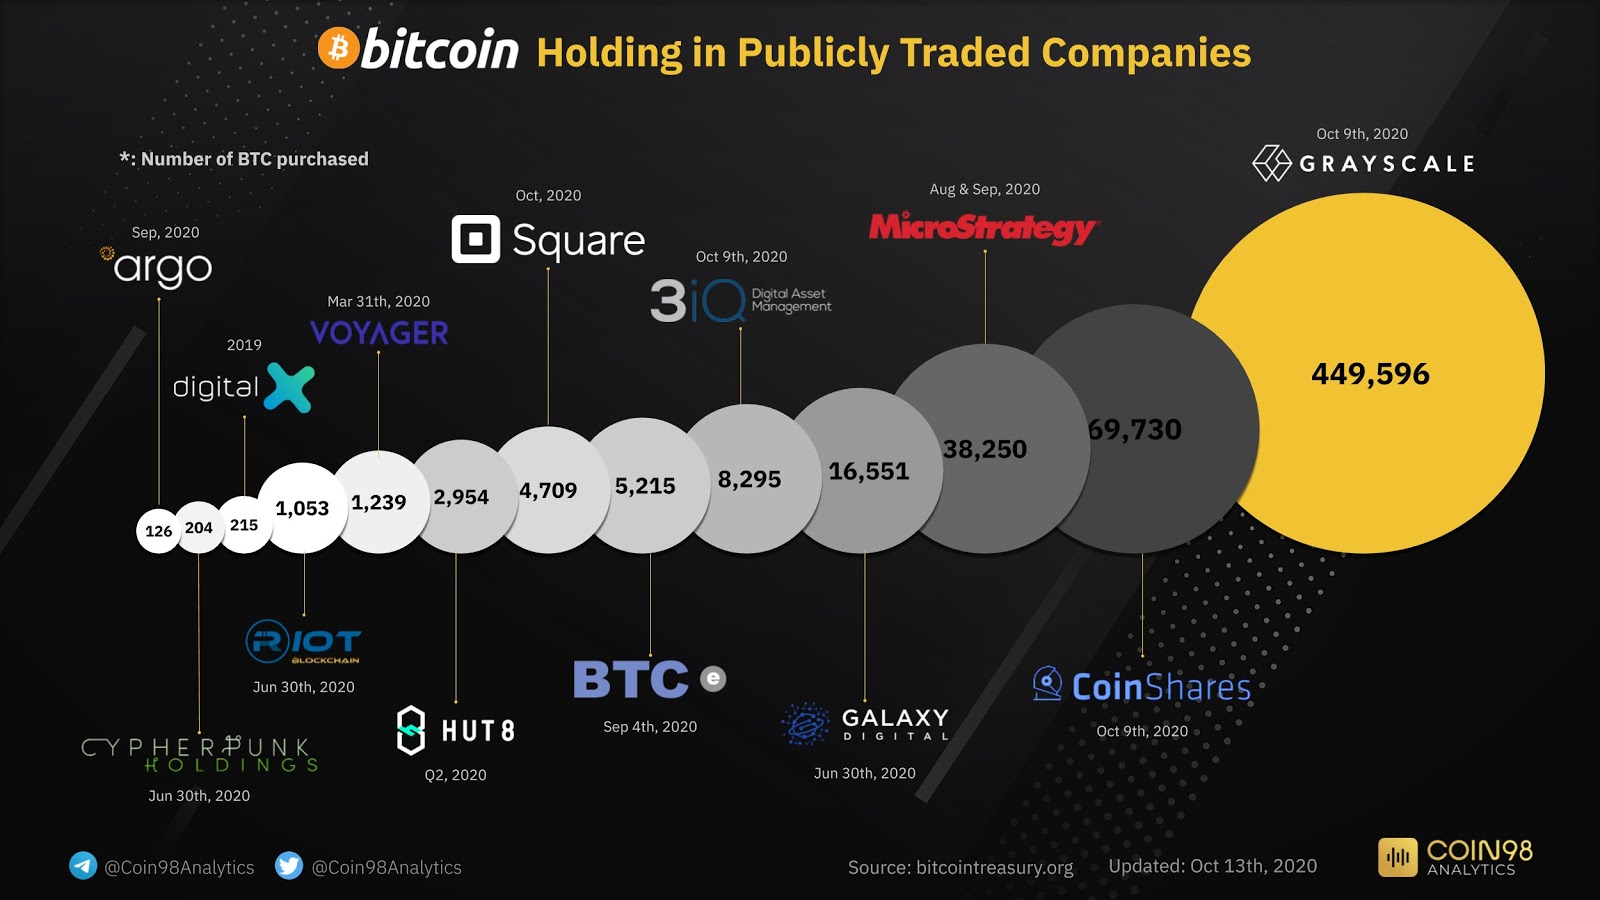 Public companies’ Bitcoin holdings